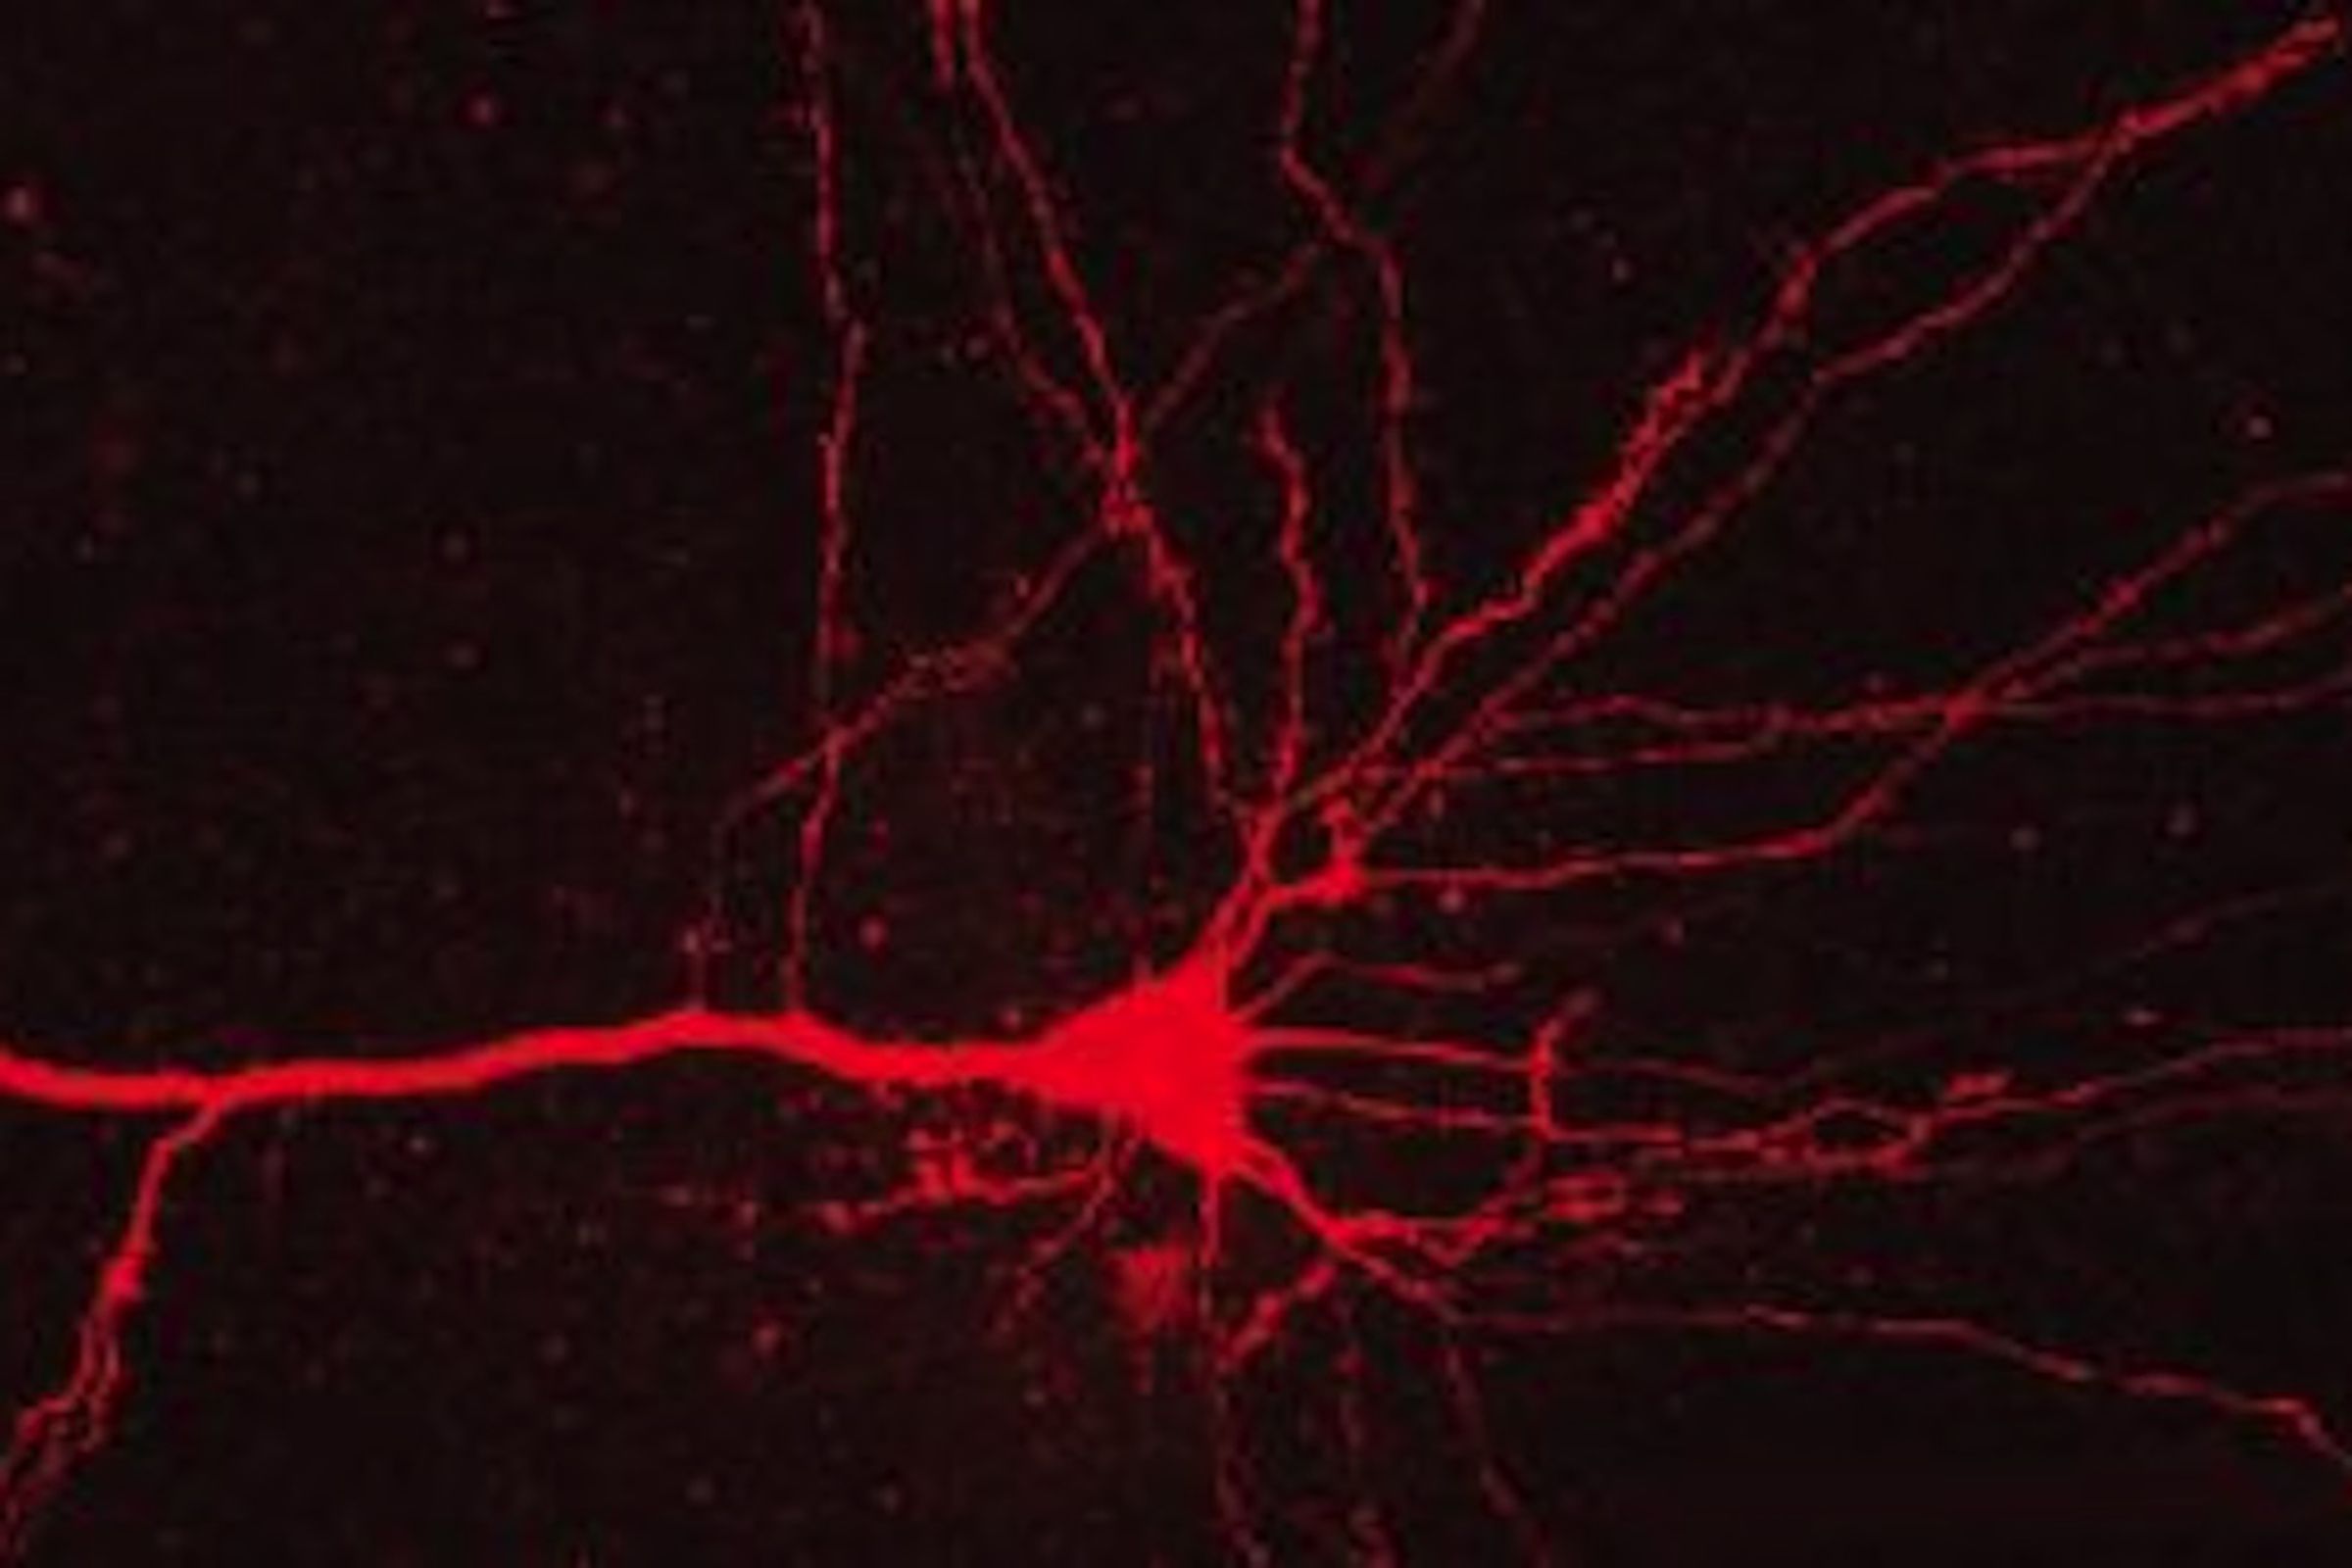 Neurons with light sensitive molecules